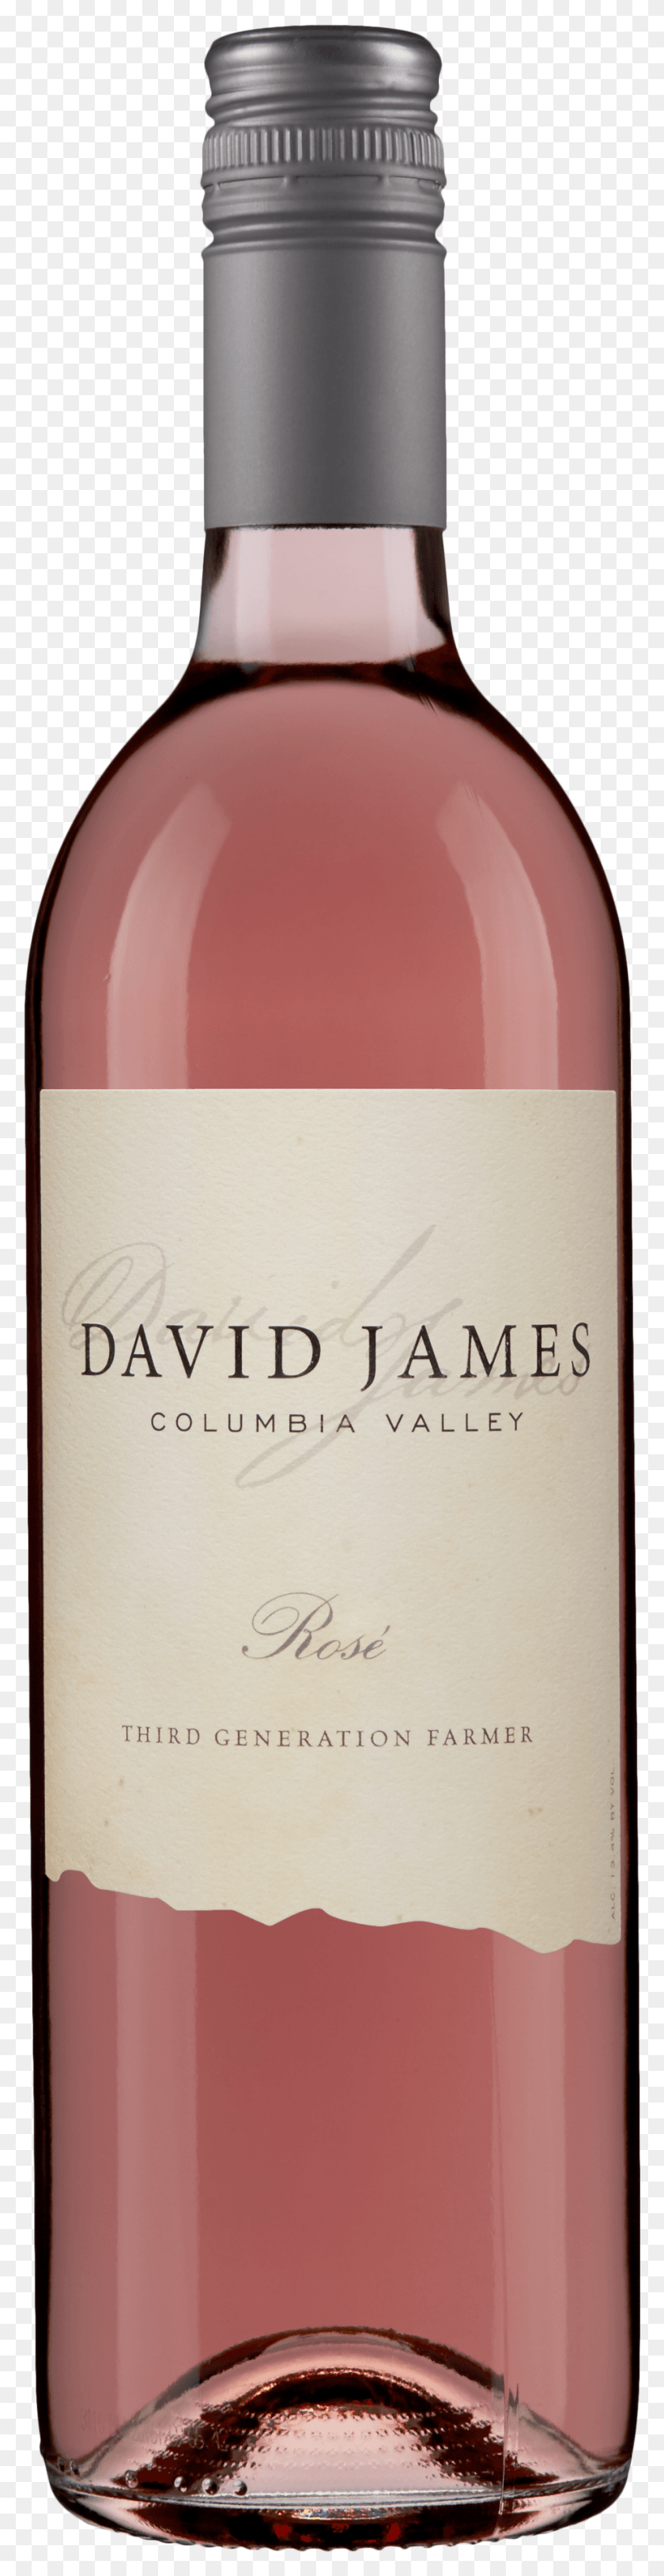 924x3790 Davidjames Rose Bs David James Winery, Vino, Alcohol, Bebidas Hd Png